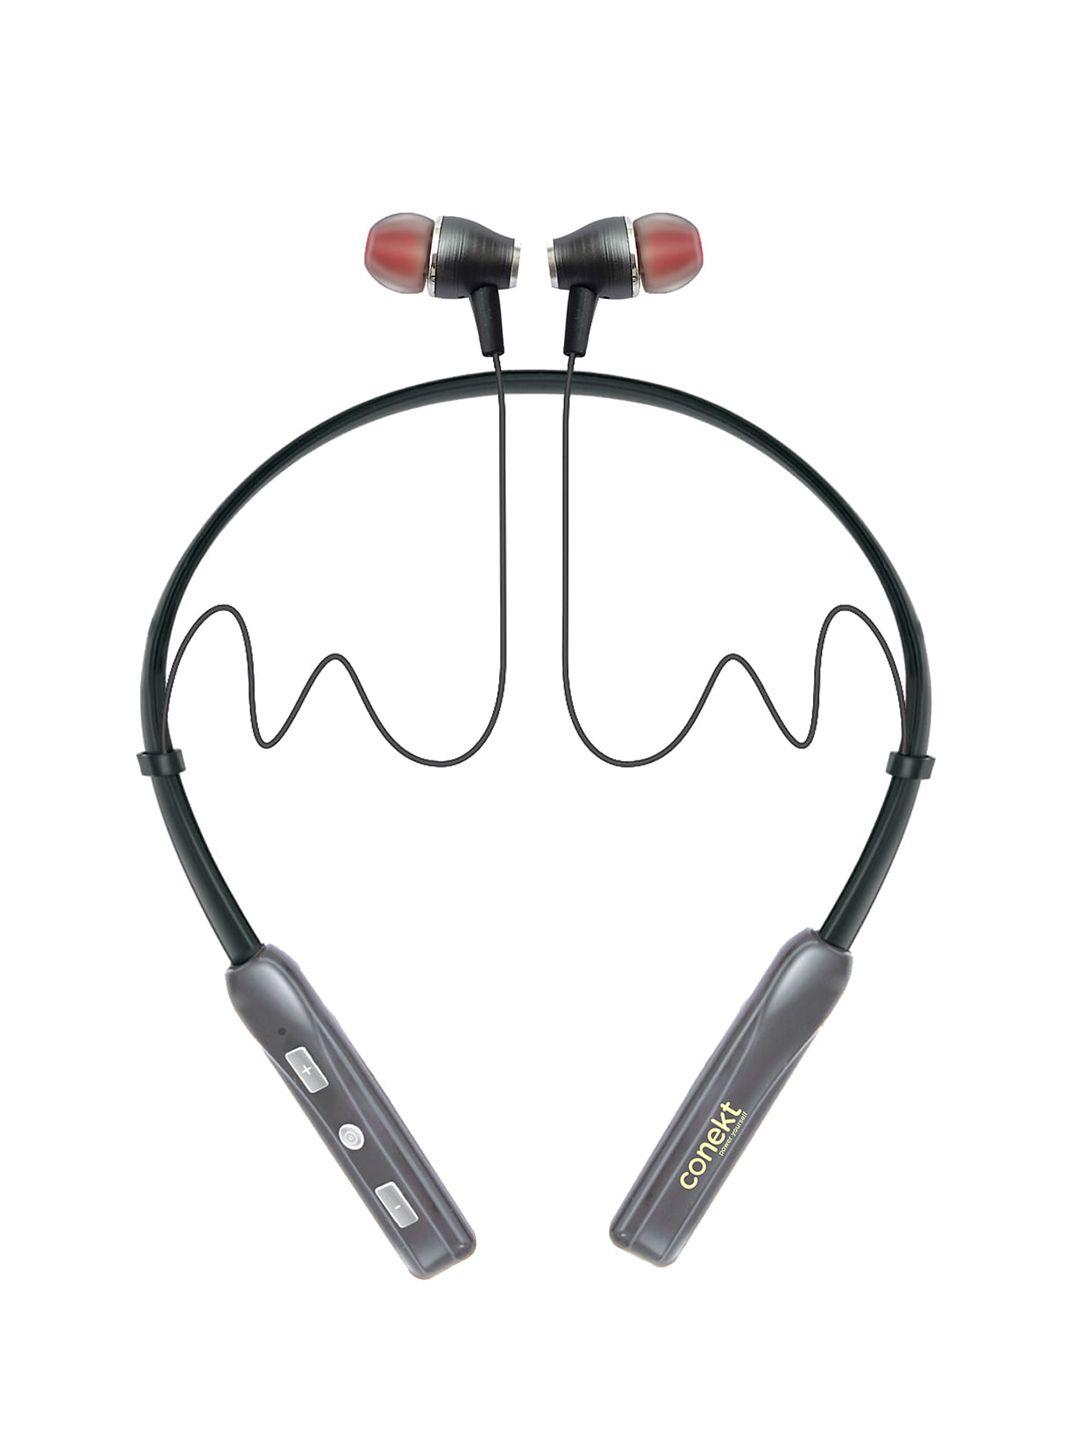 conekt 5 bounce max bluetooth neckband headphone - grey